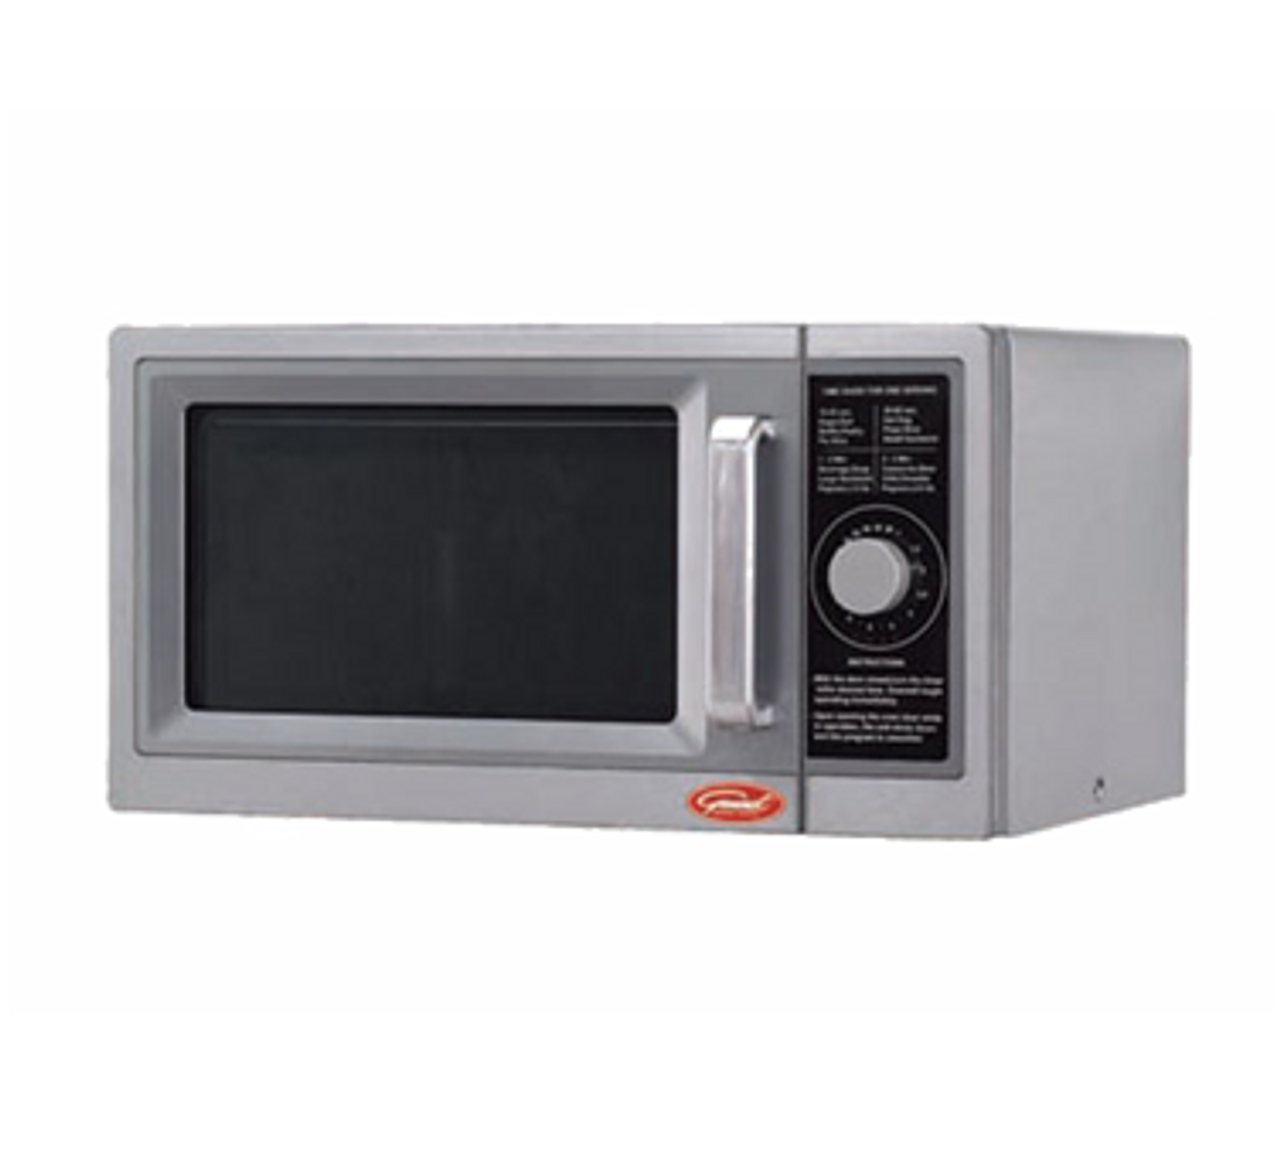 Sharp R21LCFS: Medium Duty 1000W Commercial Microwave